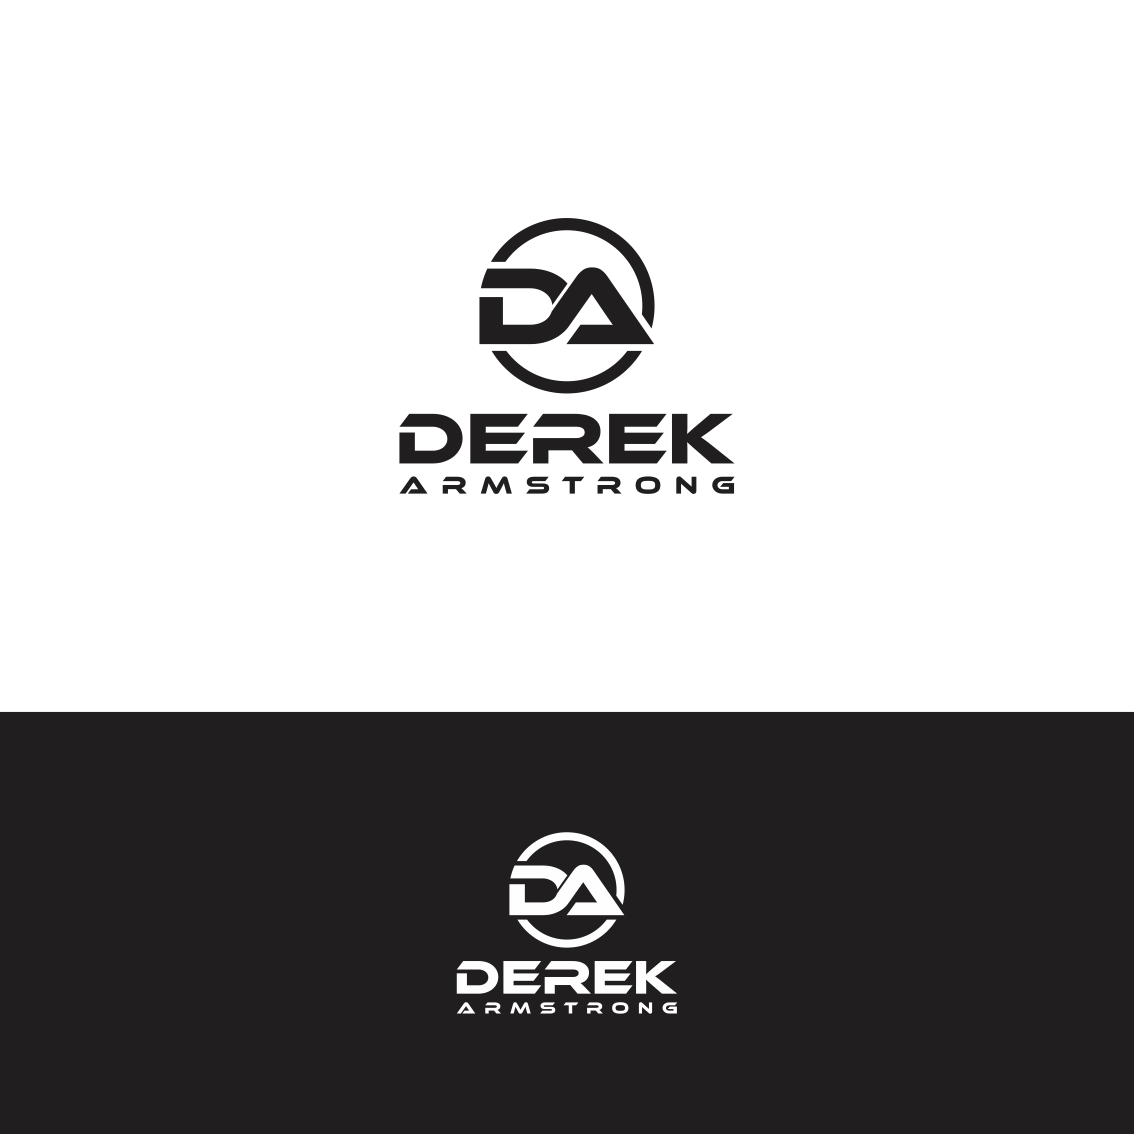 Derek Logo - DesignContest Armstrong Derek Armstrong